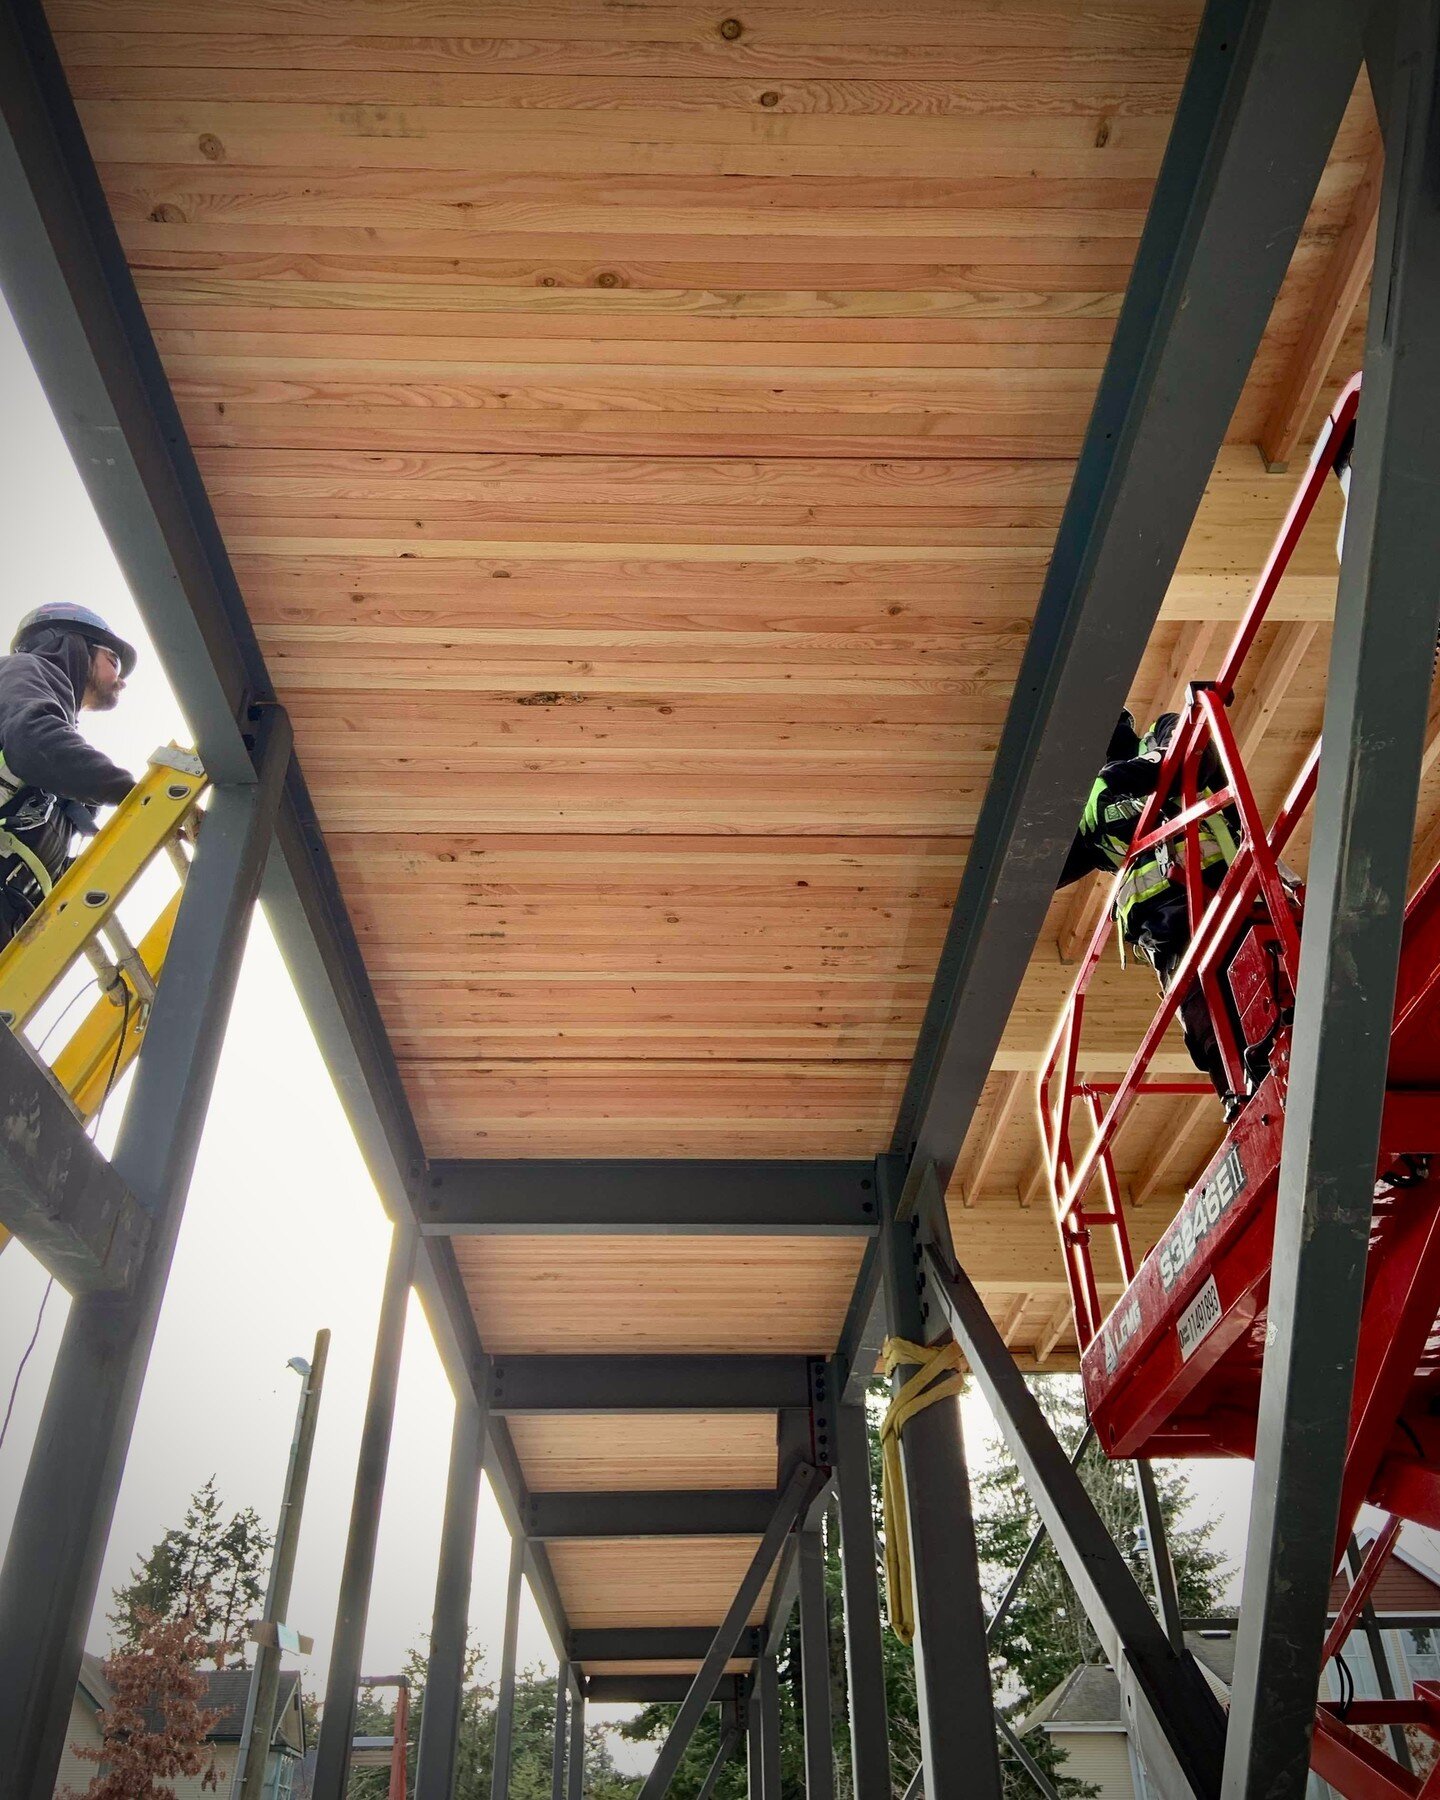 NLT installation at Lelǝm̓ Community Centre⁠
⁠
@musqueamcapital ⁠
@lelemliving ⁠
@francl_arch⁠
@fastepp ⁠
@turner_cdn⁠
⁠
#lelemliving #musqueamnation #masstimber #glulam #NLT #naillaminatedtimber #timberarchitecture #sustainable #timber #wood #woodar